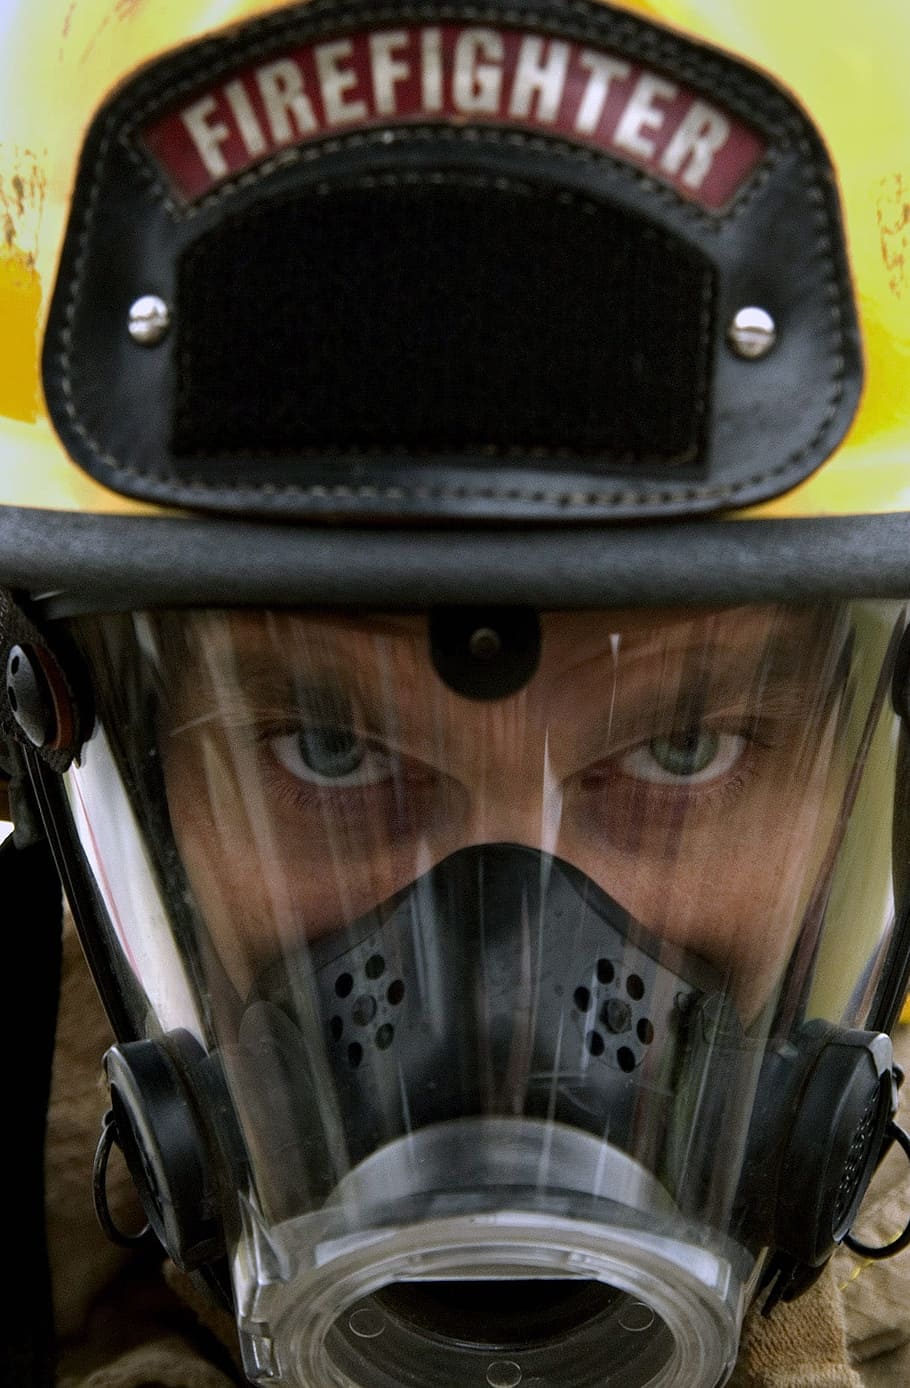 black and gray Firefighter helmet, Fireman, Protection, uniform